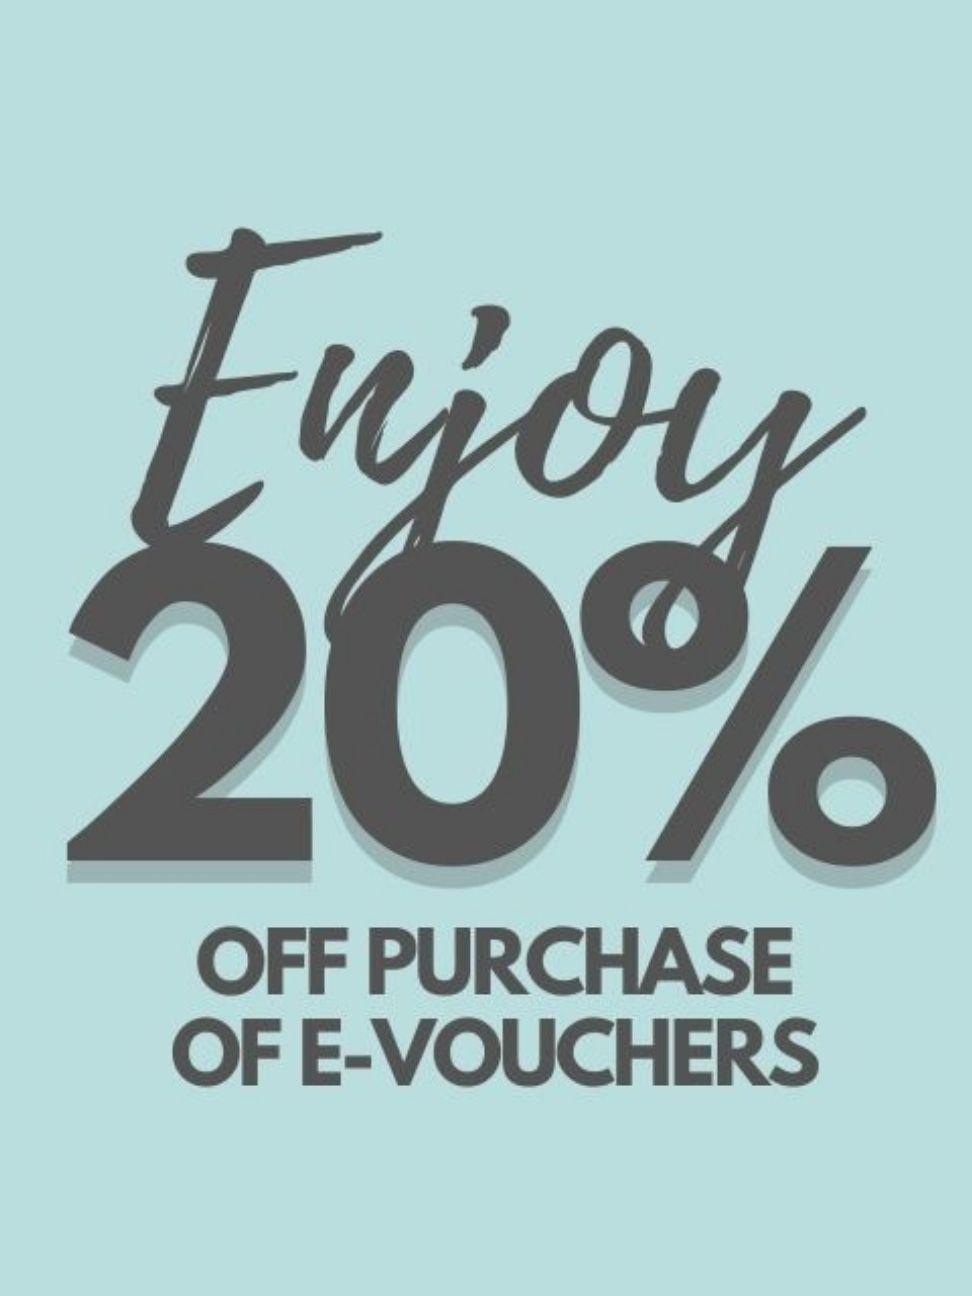 Enjoy 20% off purchase of e-vouchers!